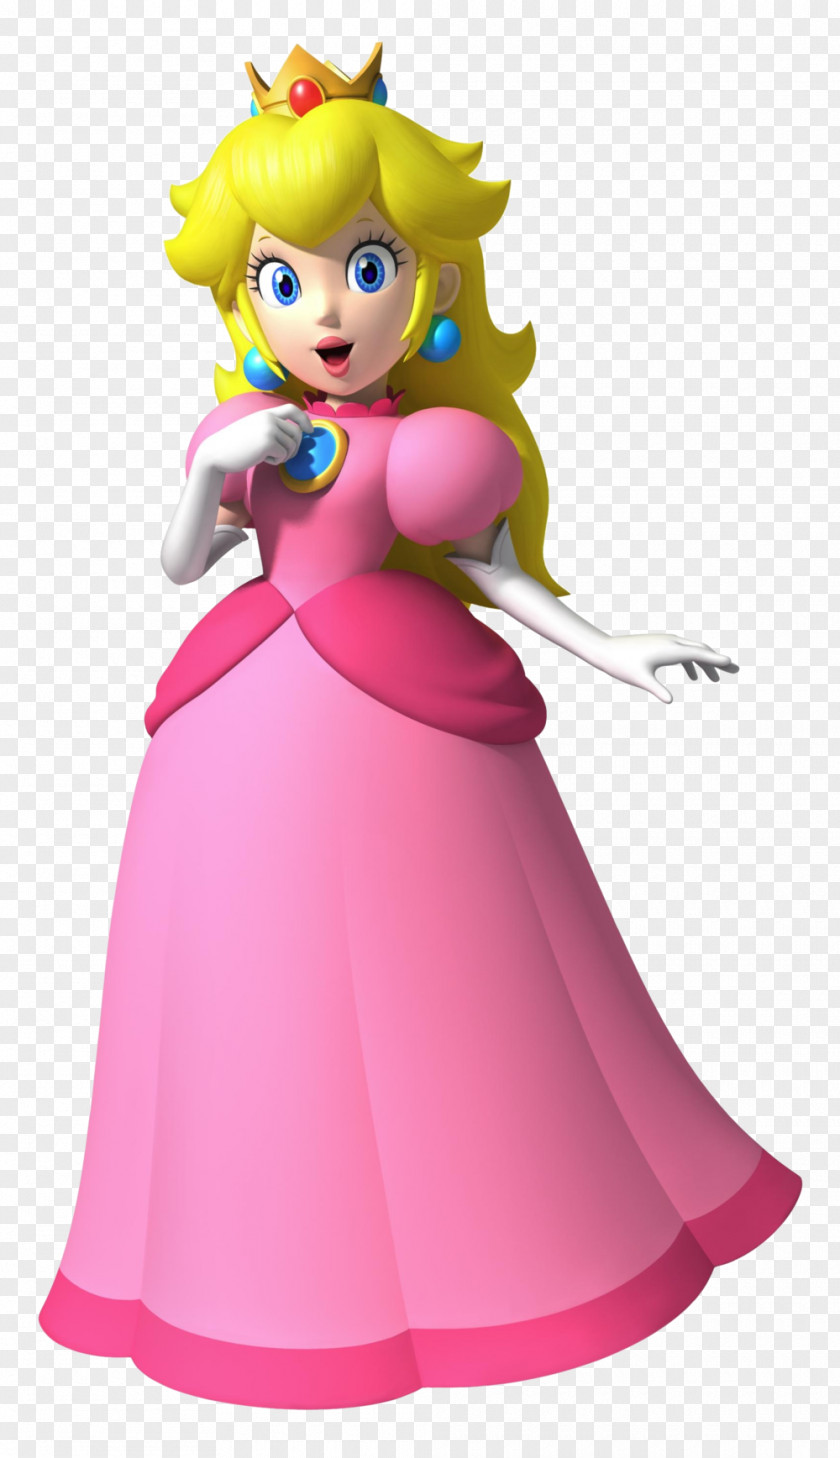 Peach Super Mario Bros. Princess Daisy PNG